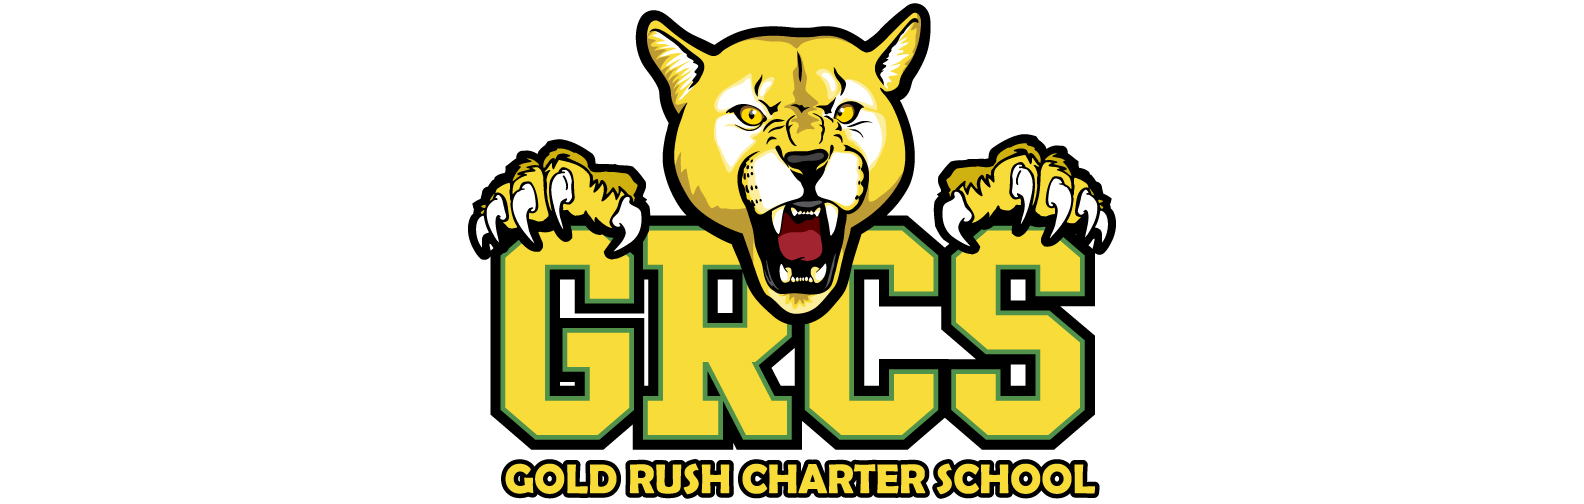 Gold Rush Charter School Logo